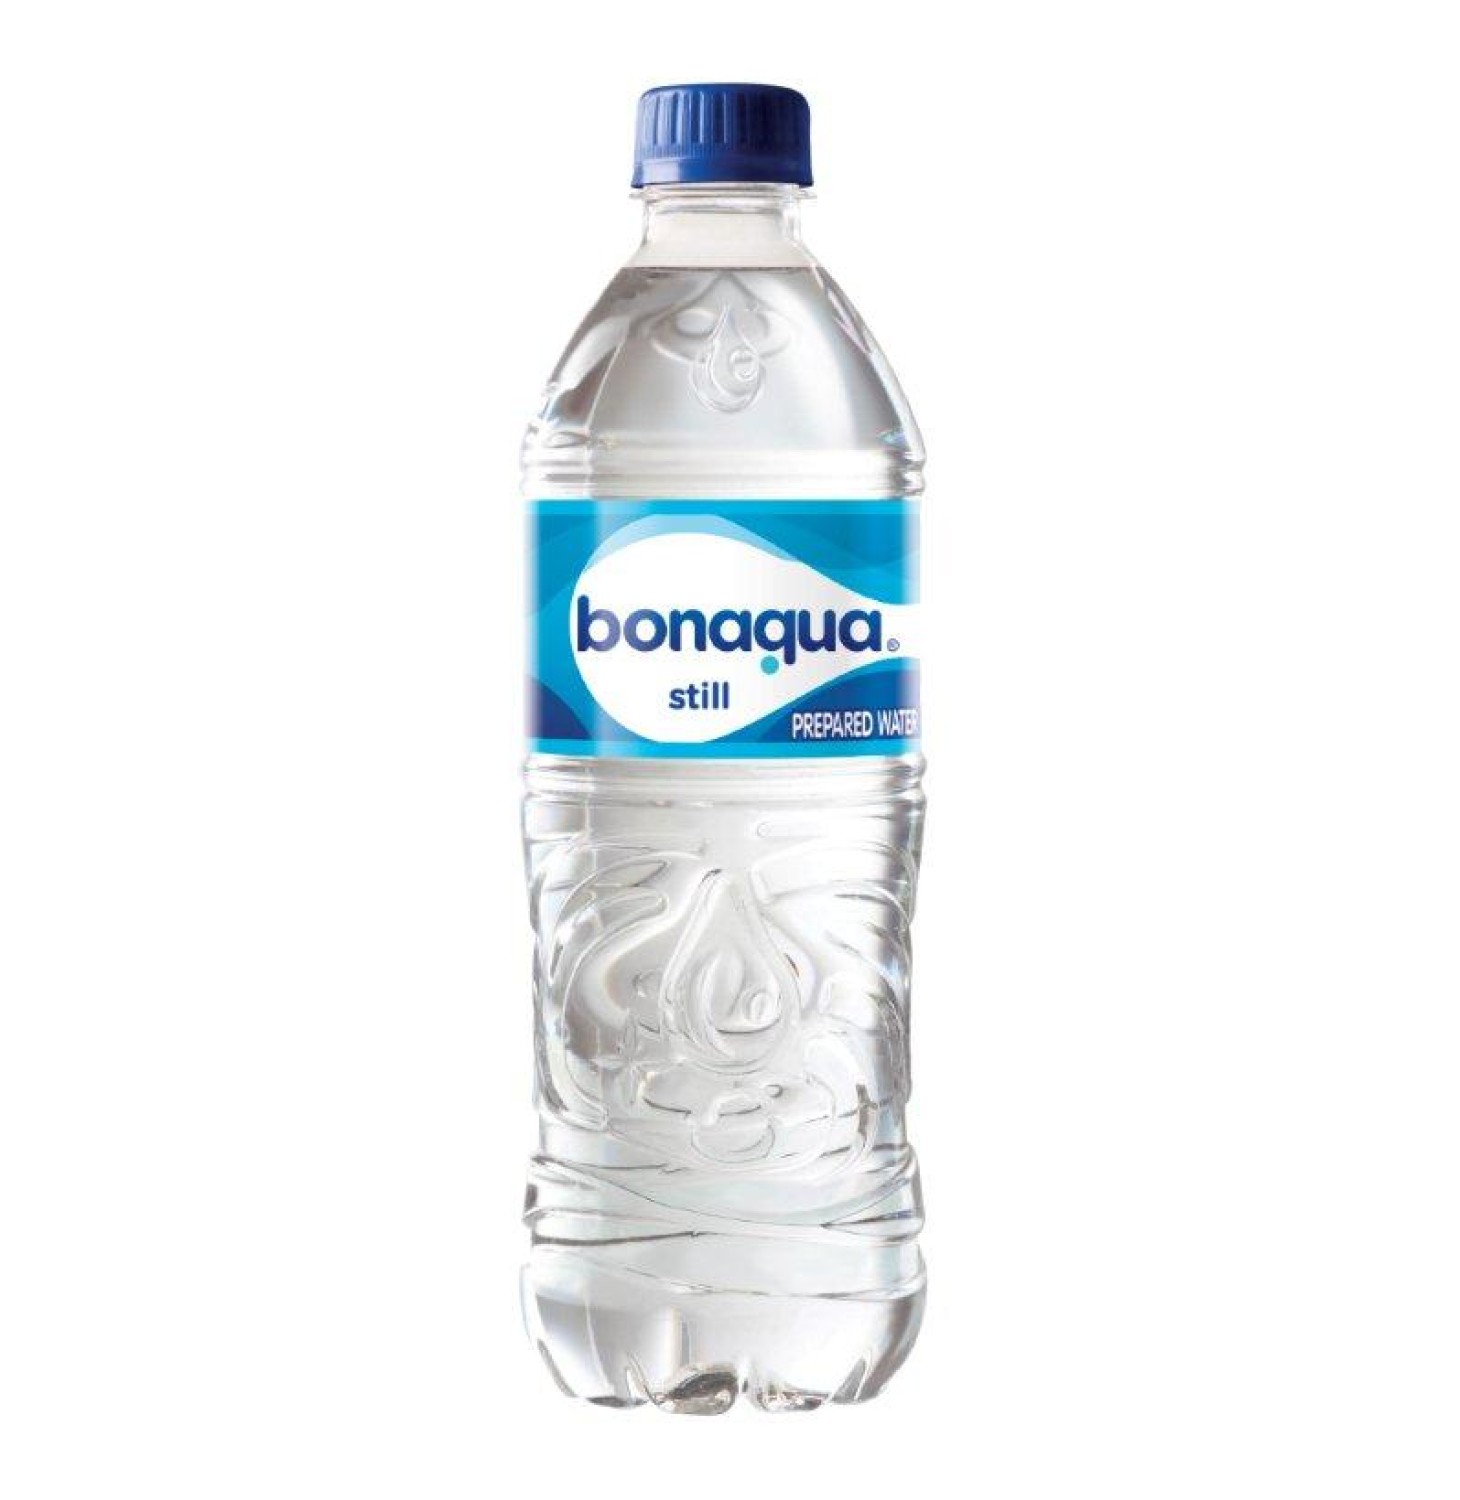 BON AQUA Water (24 x 500ml) - Lowest Prices & Specials Online | Makro